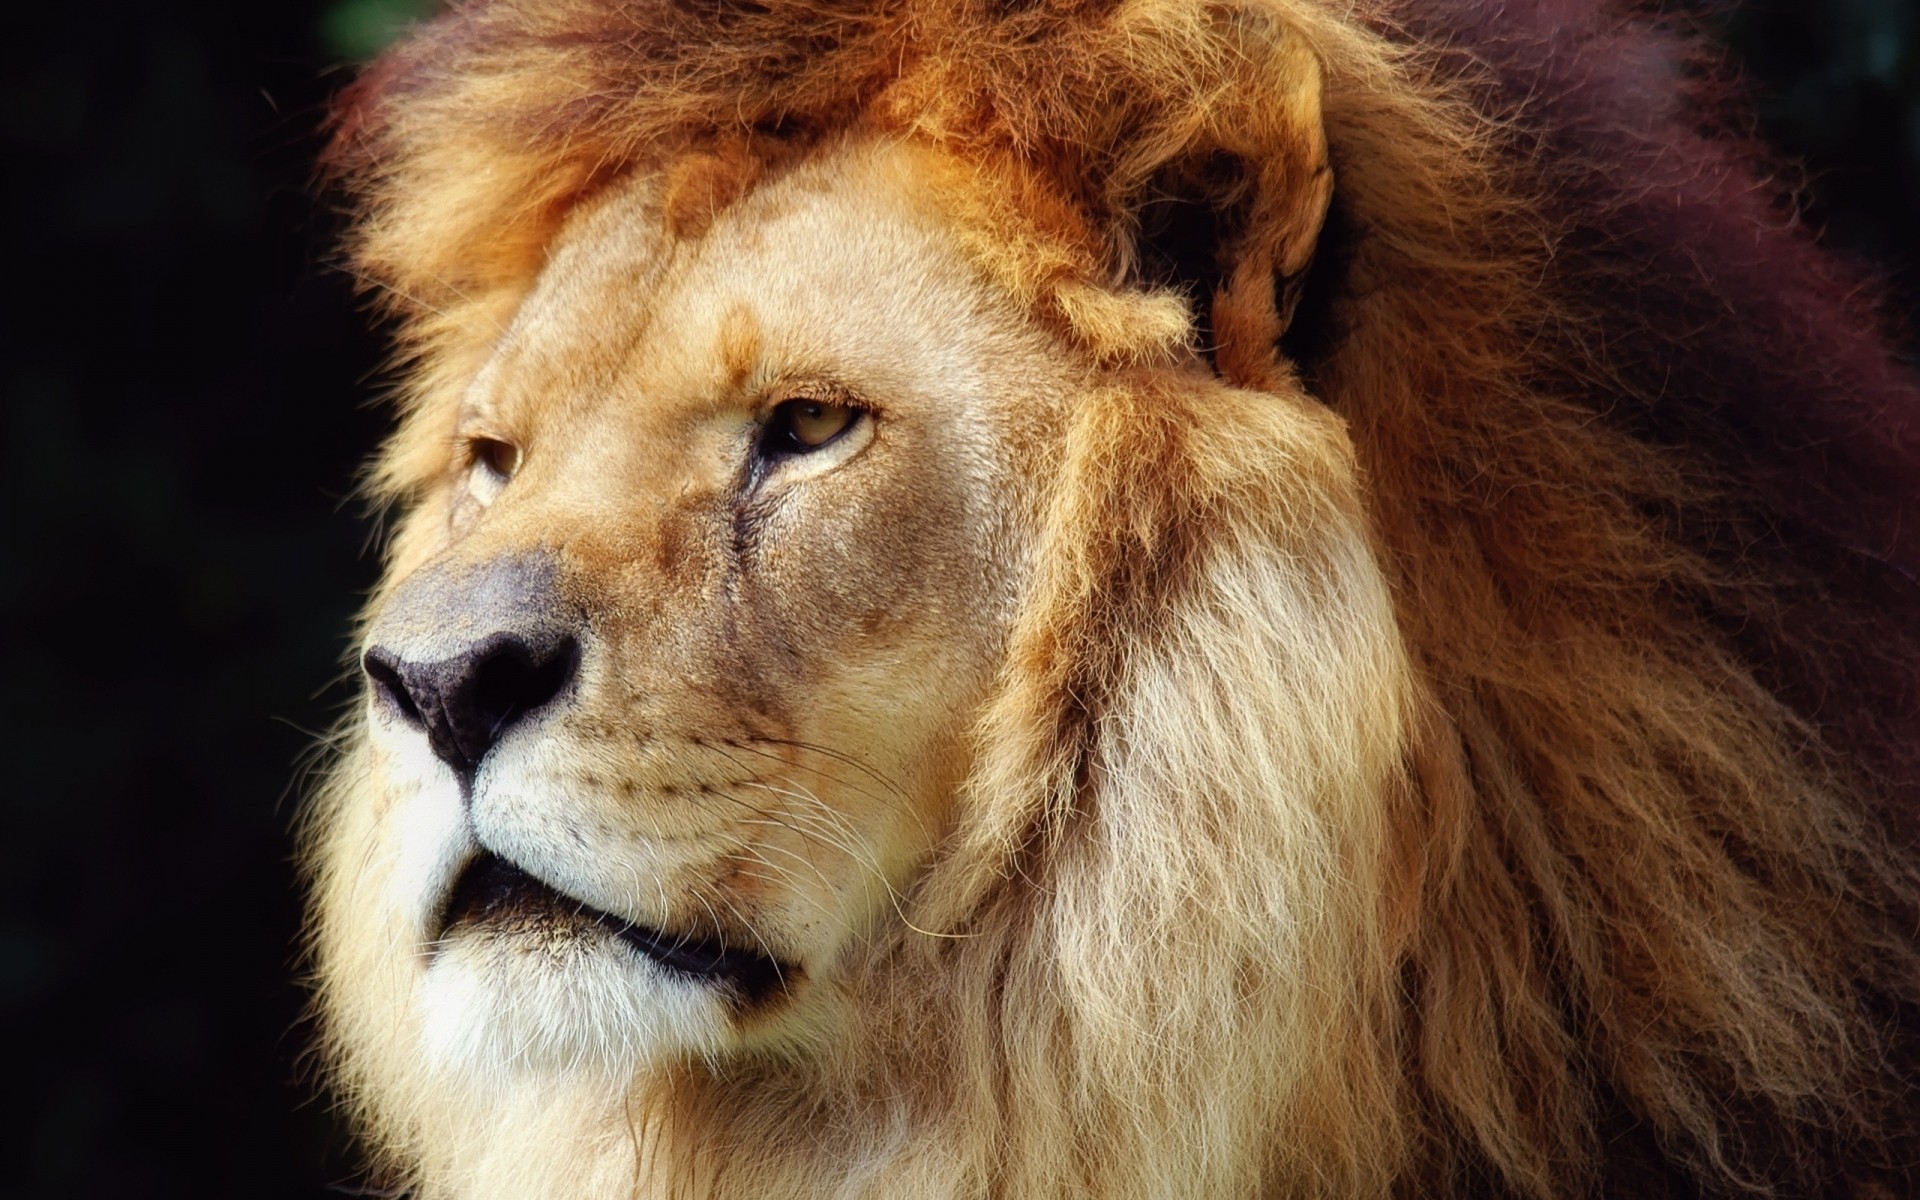 animals mammal portrait wildlife zoo fur cat animal lion wild predator nature hair king of savana